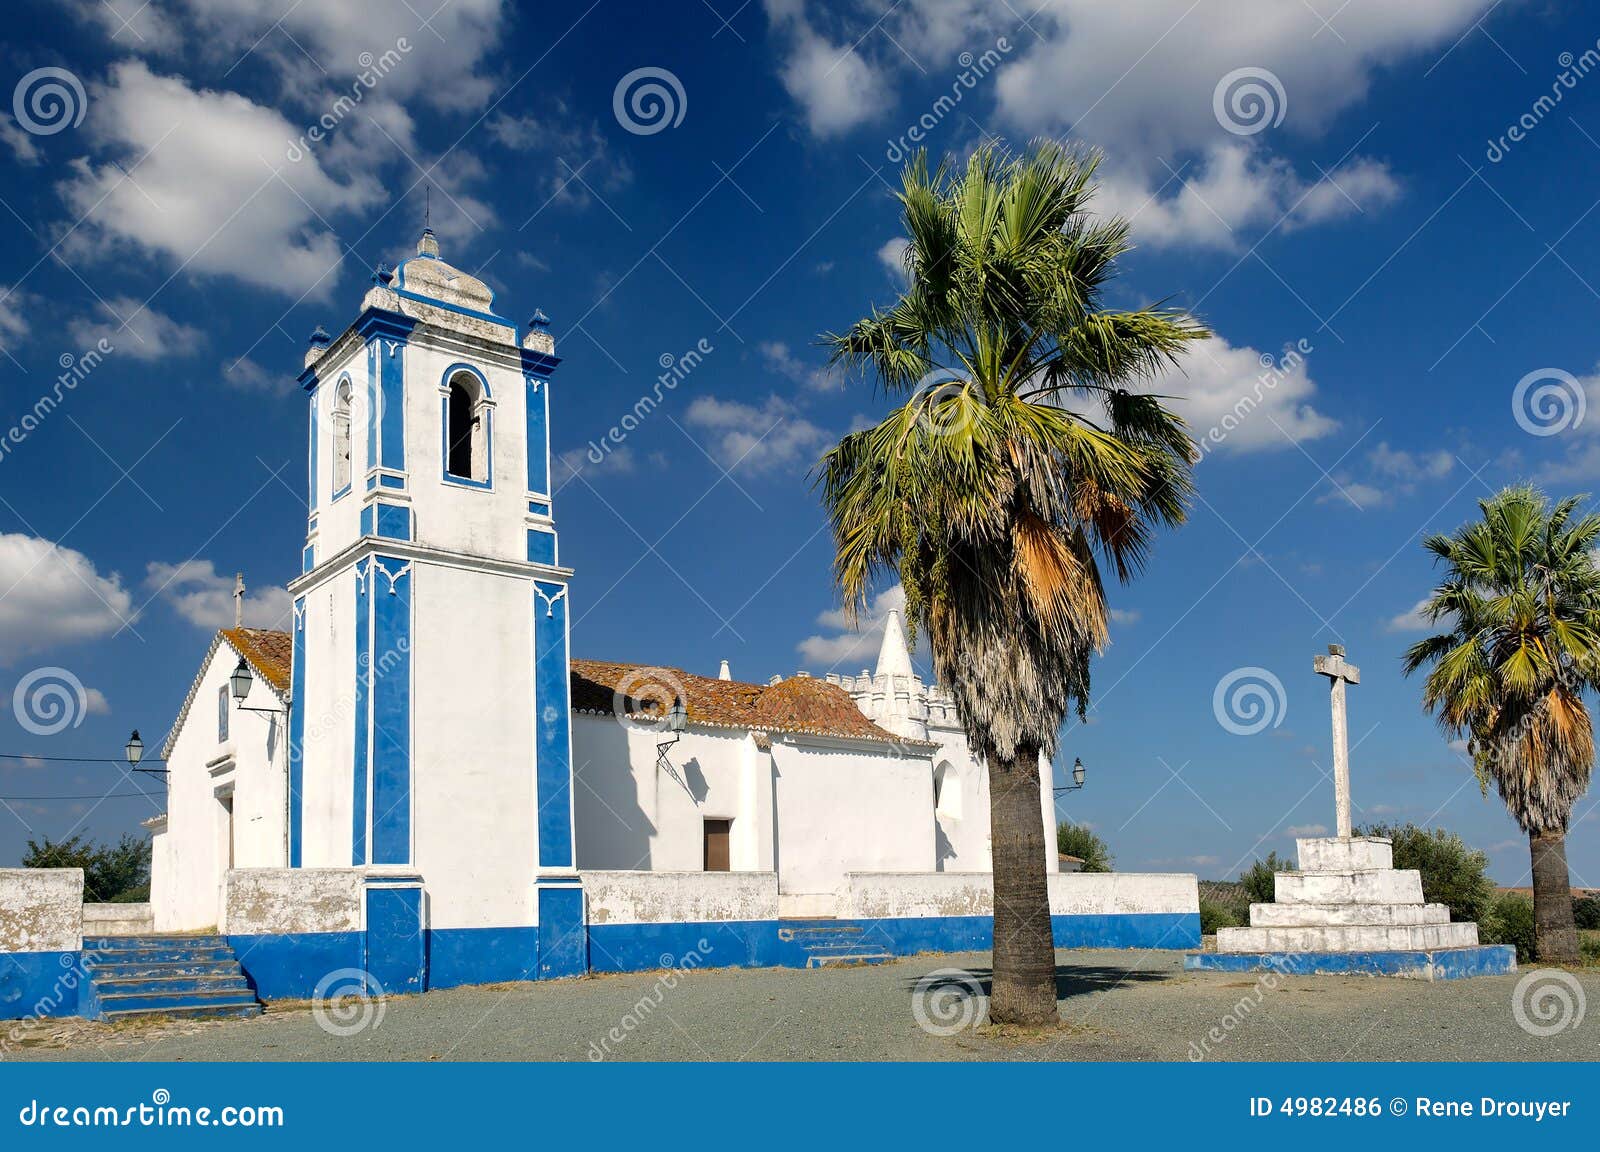 portugal, alentejo: chapel near evora